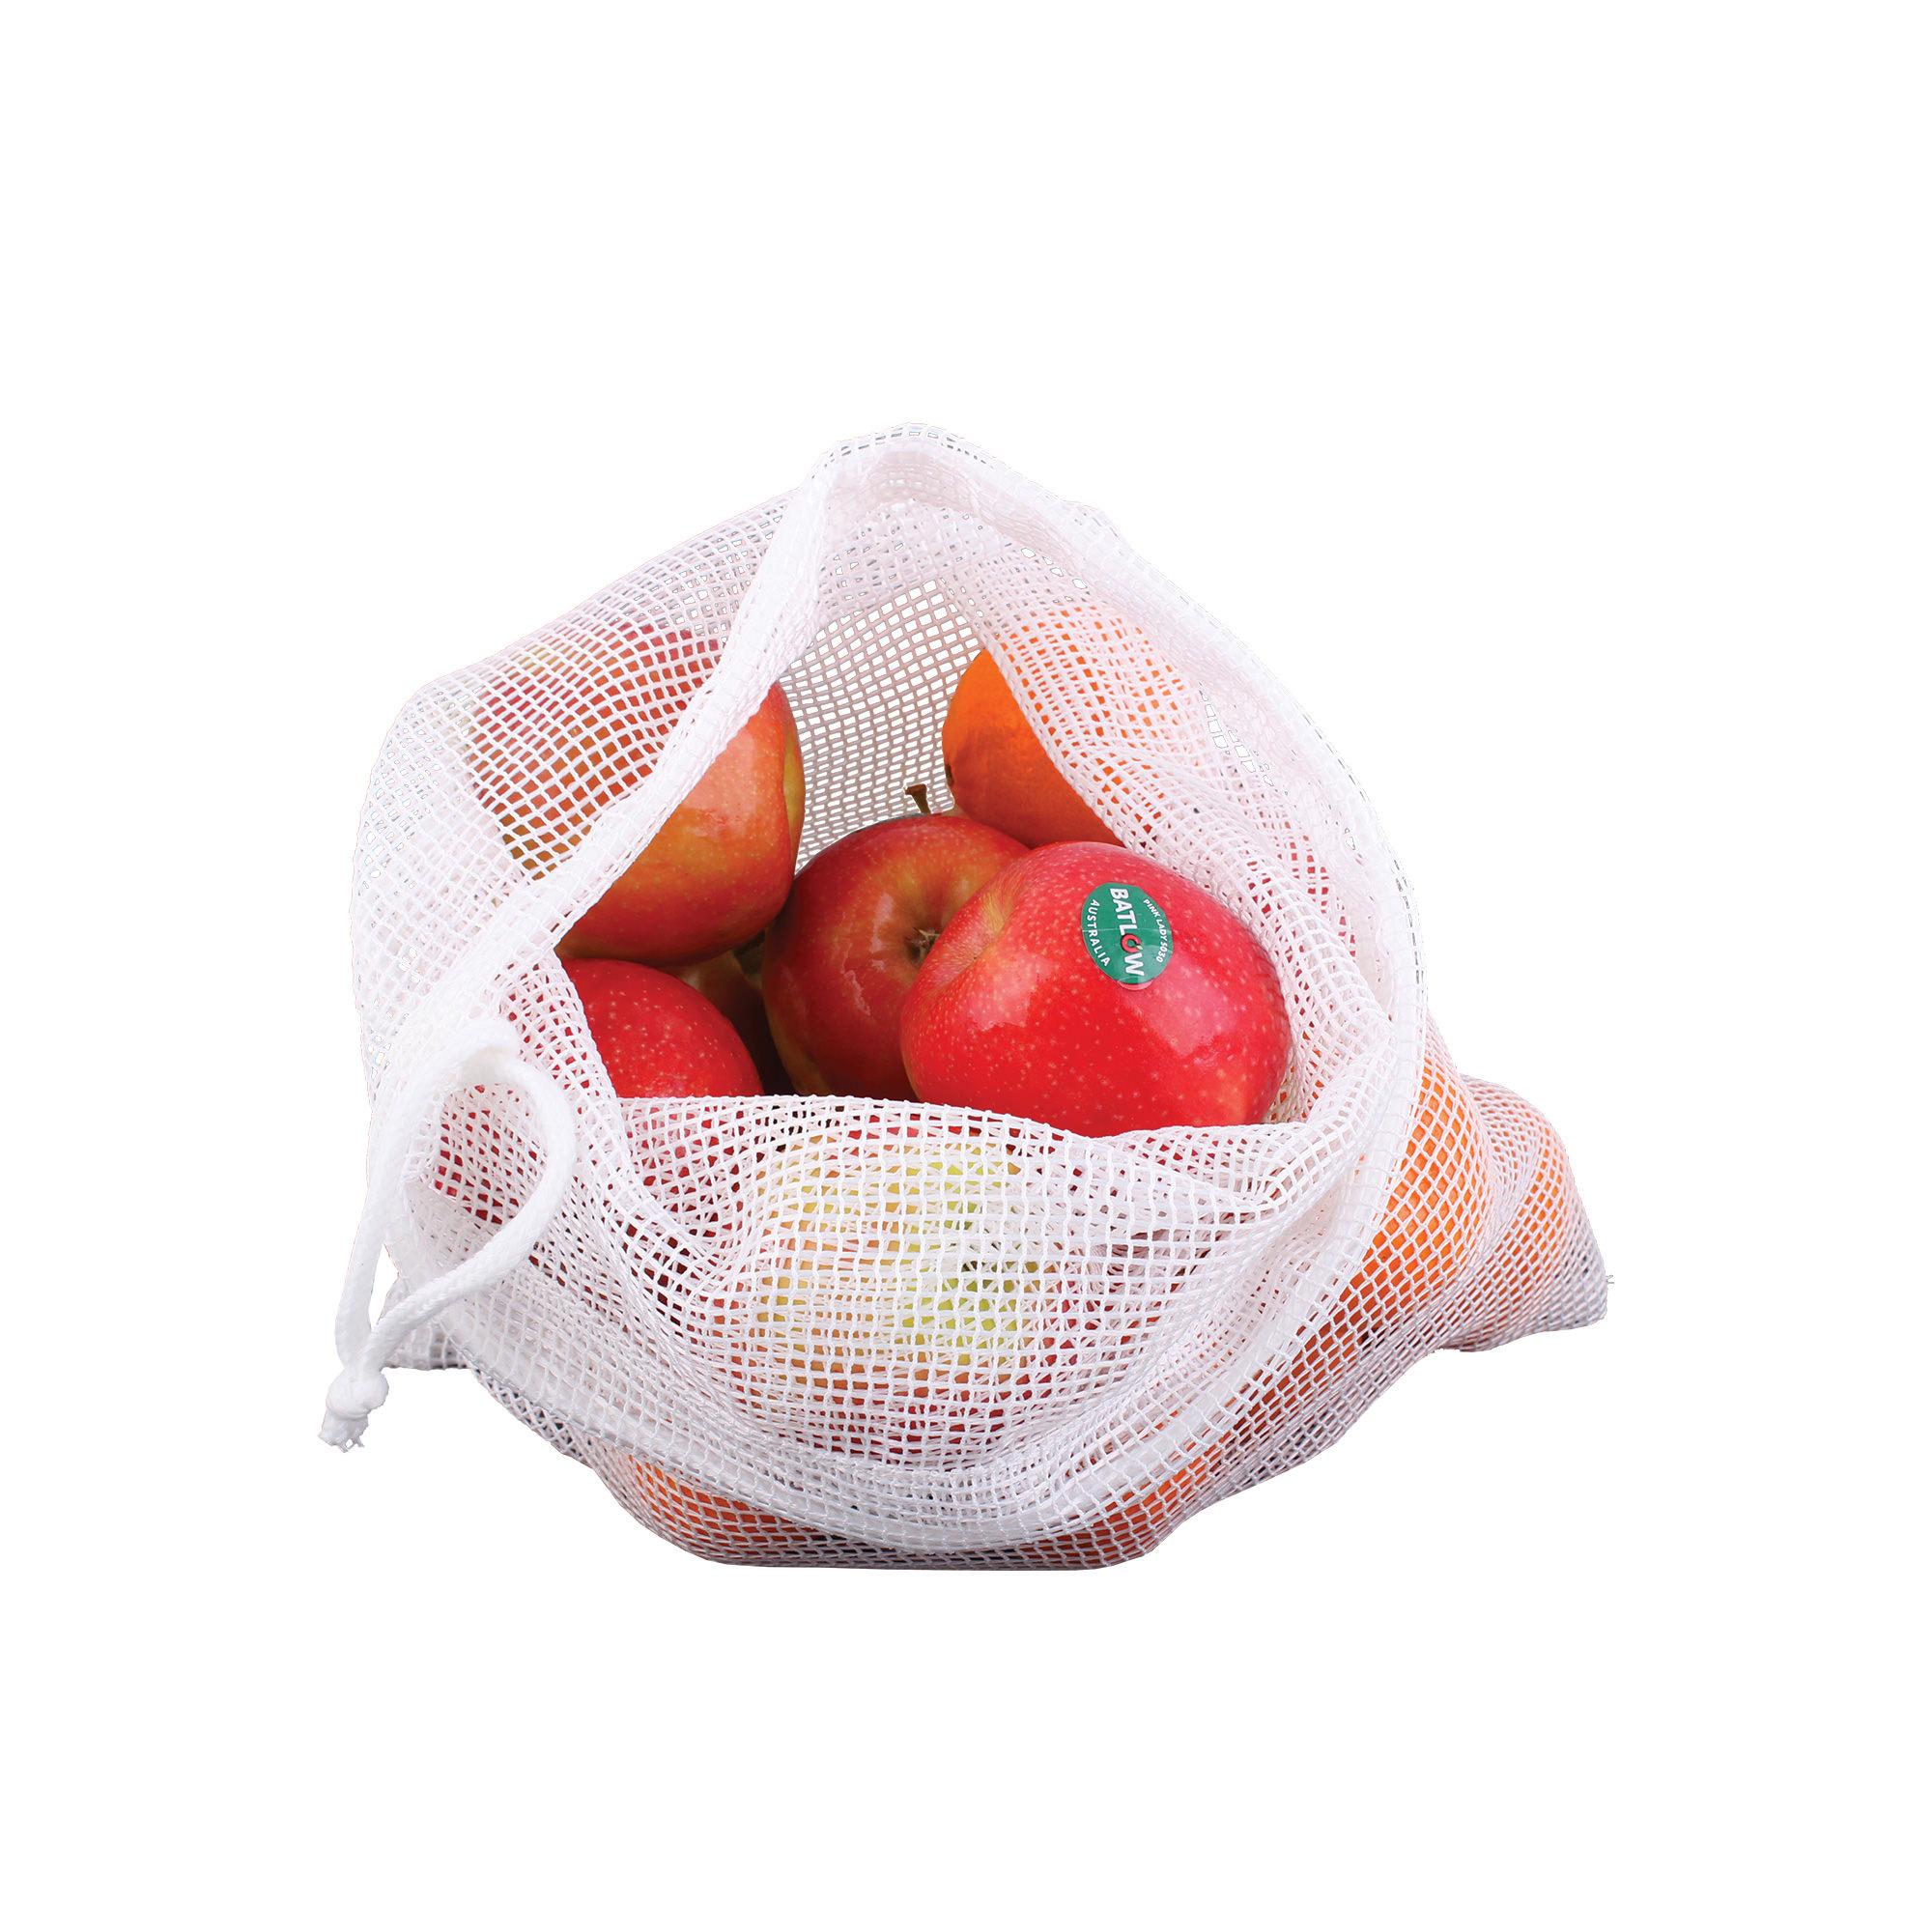 Appetito Woven Net Produce Bag Set of 3 Image 4